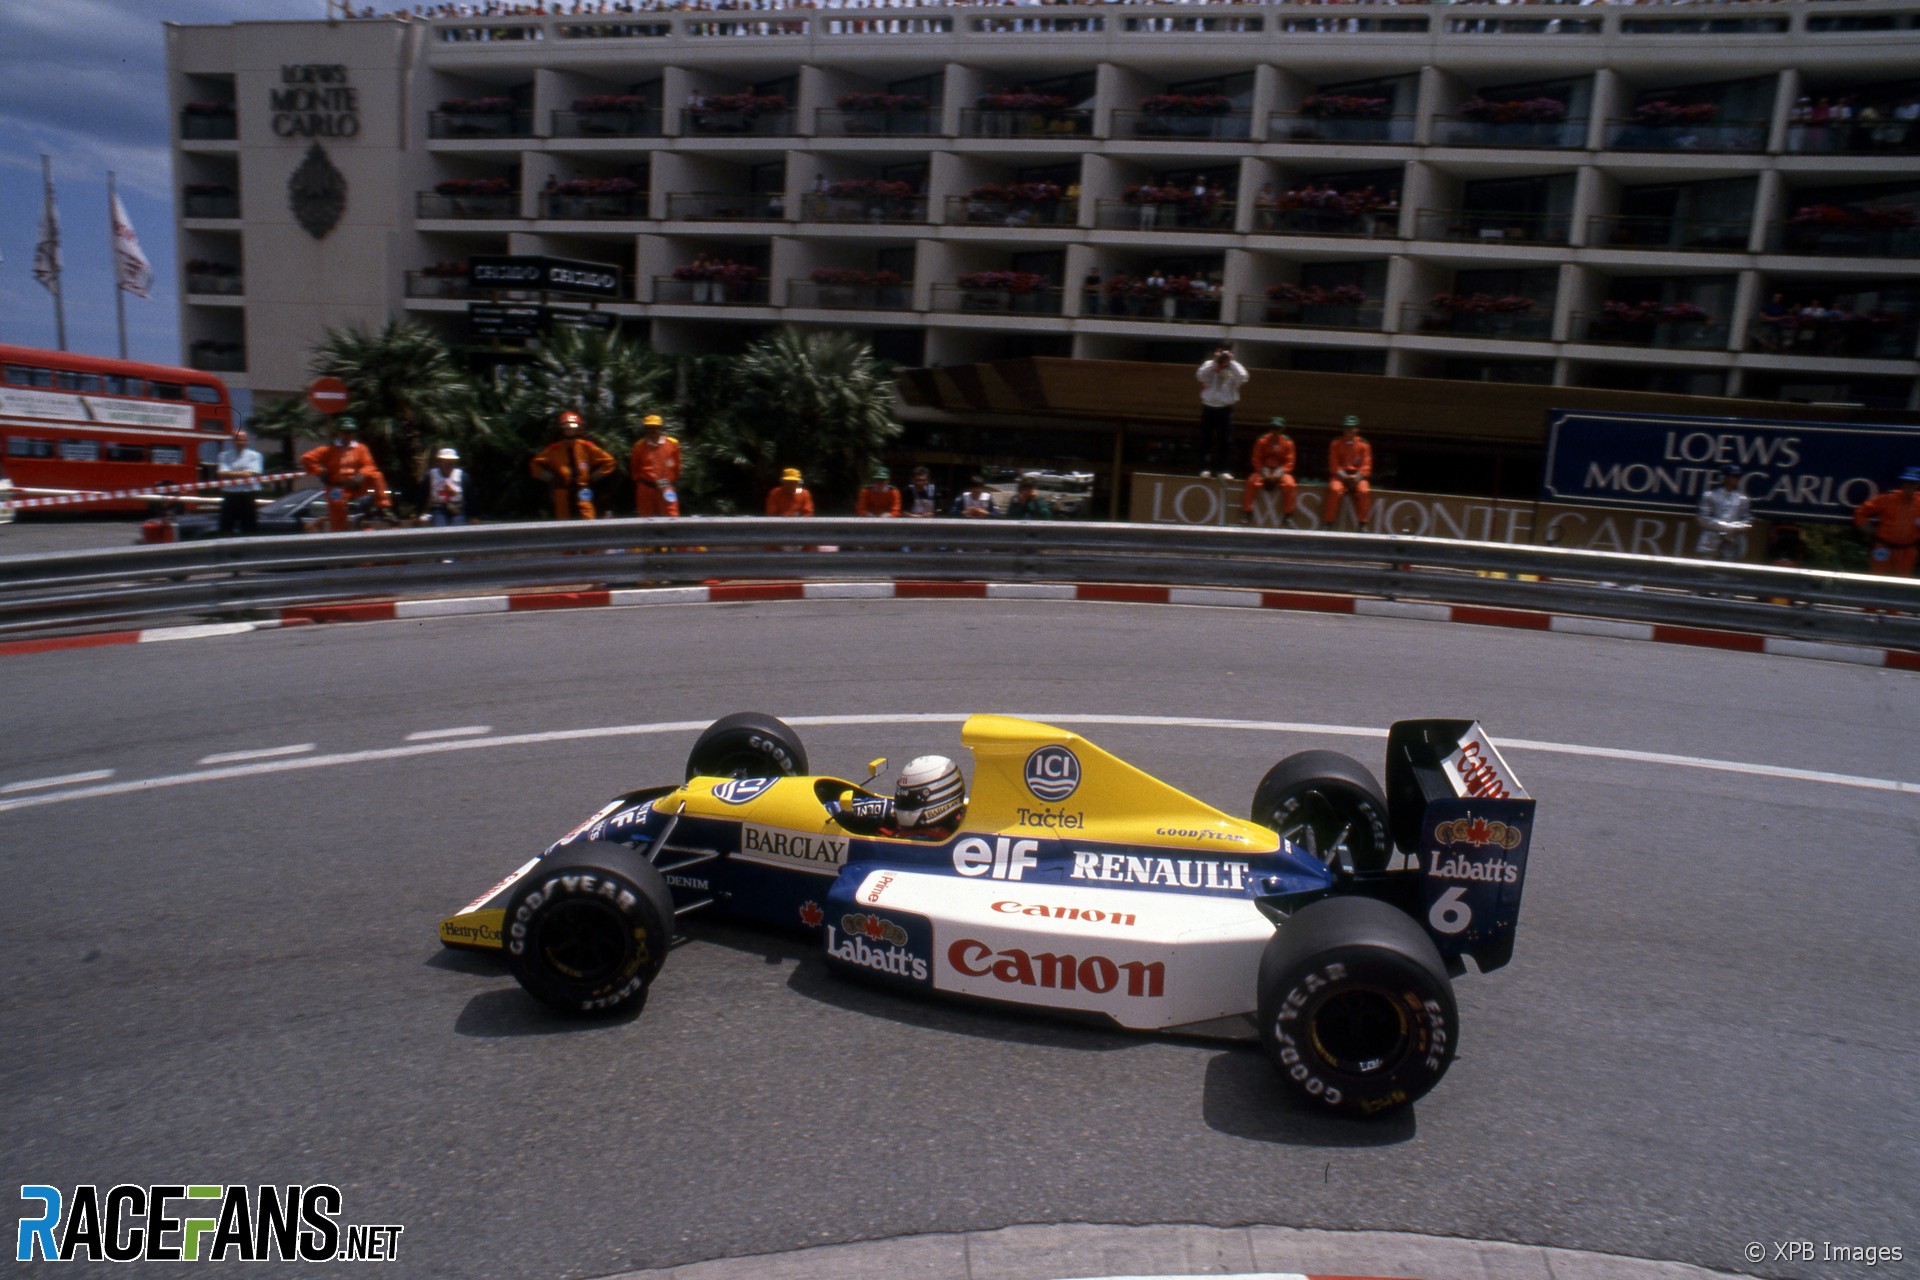 Riccardo Patrese, Williams, Monaco, 1990